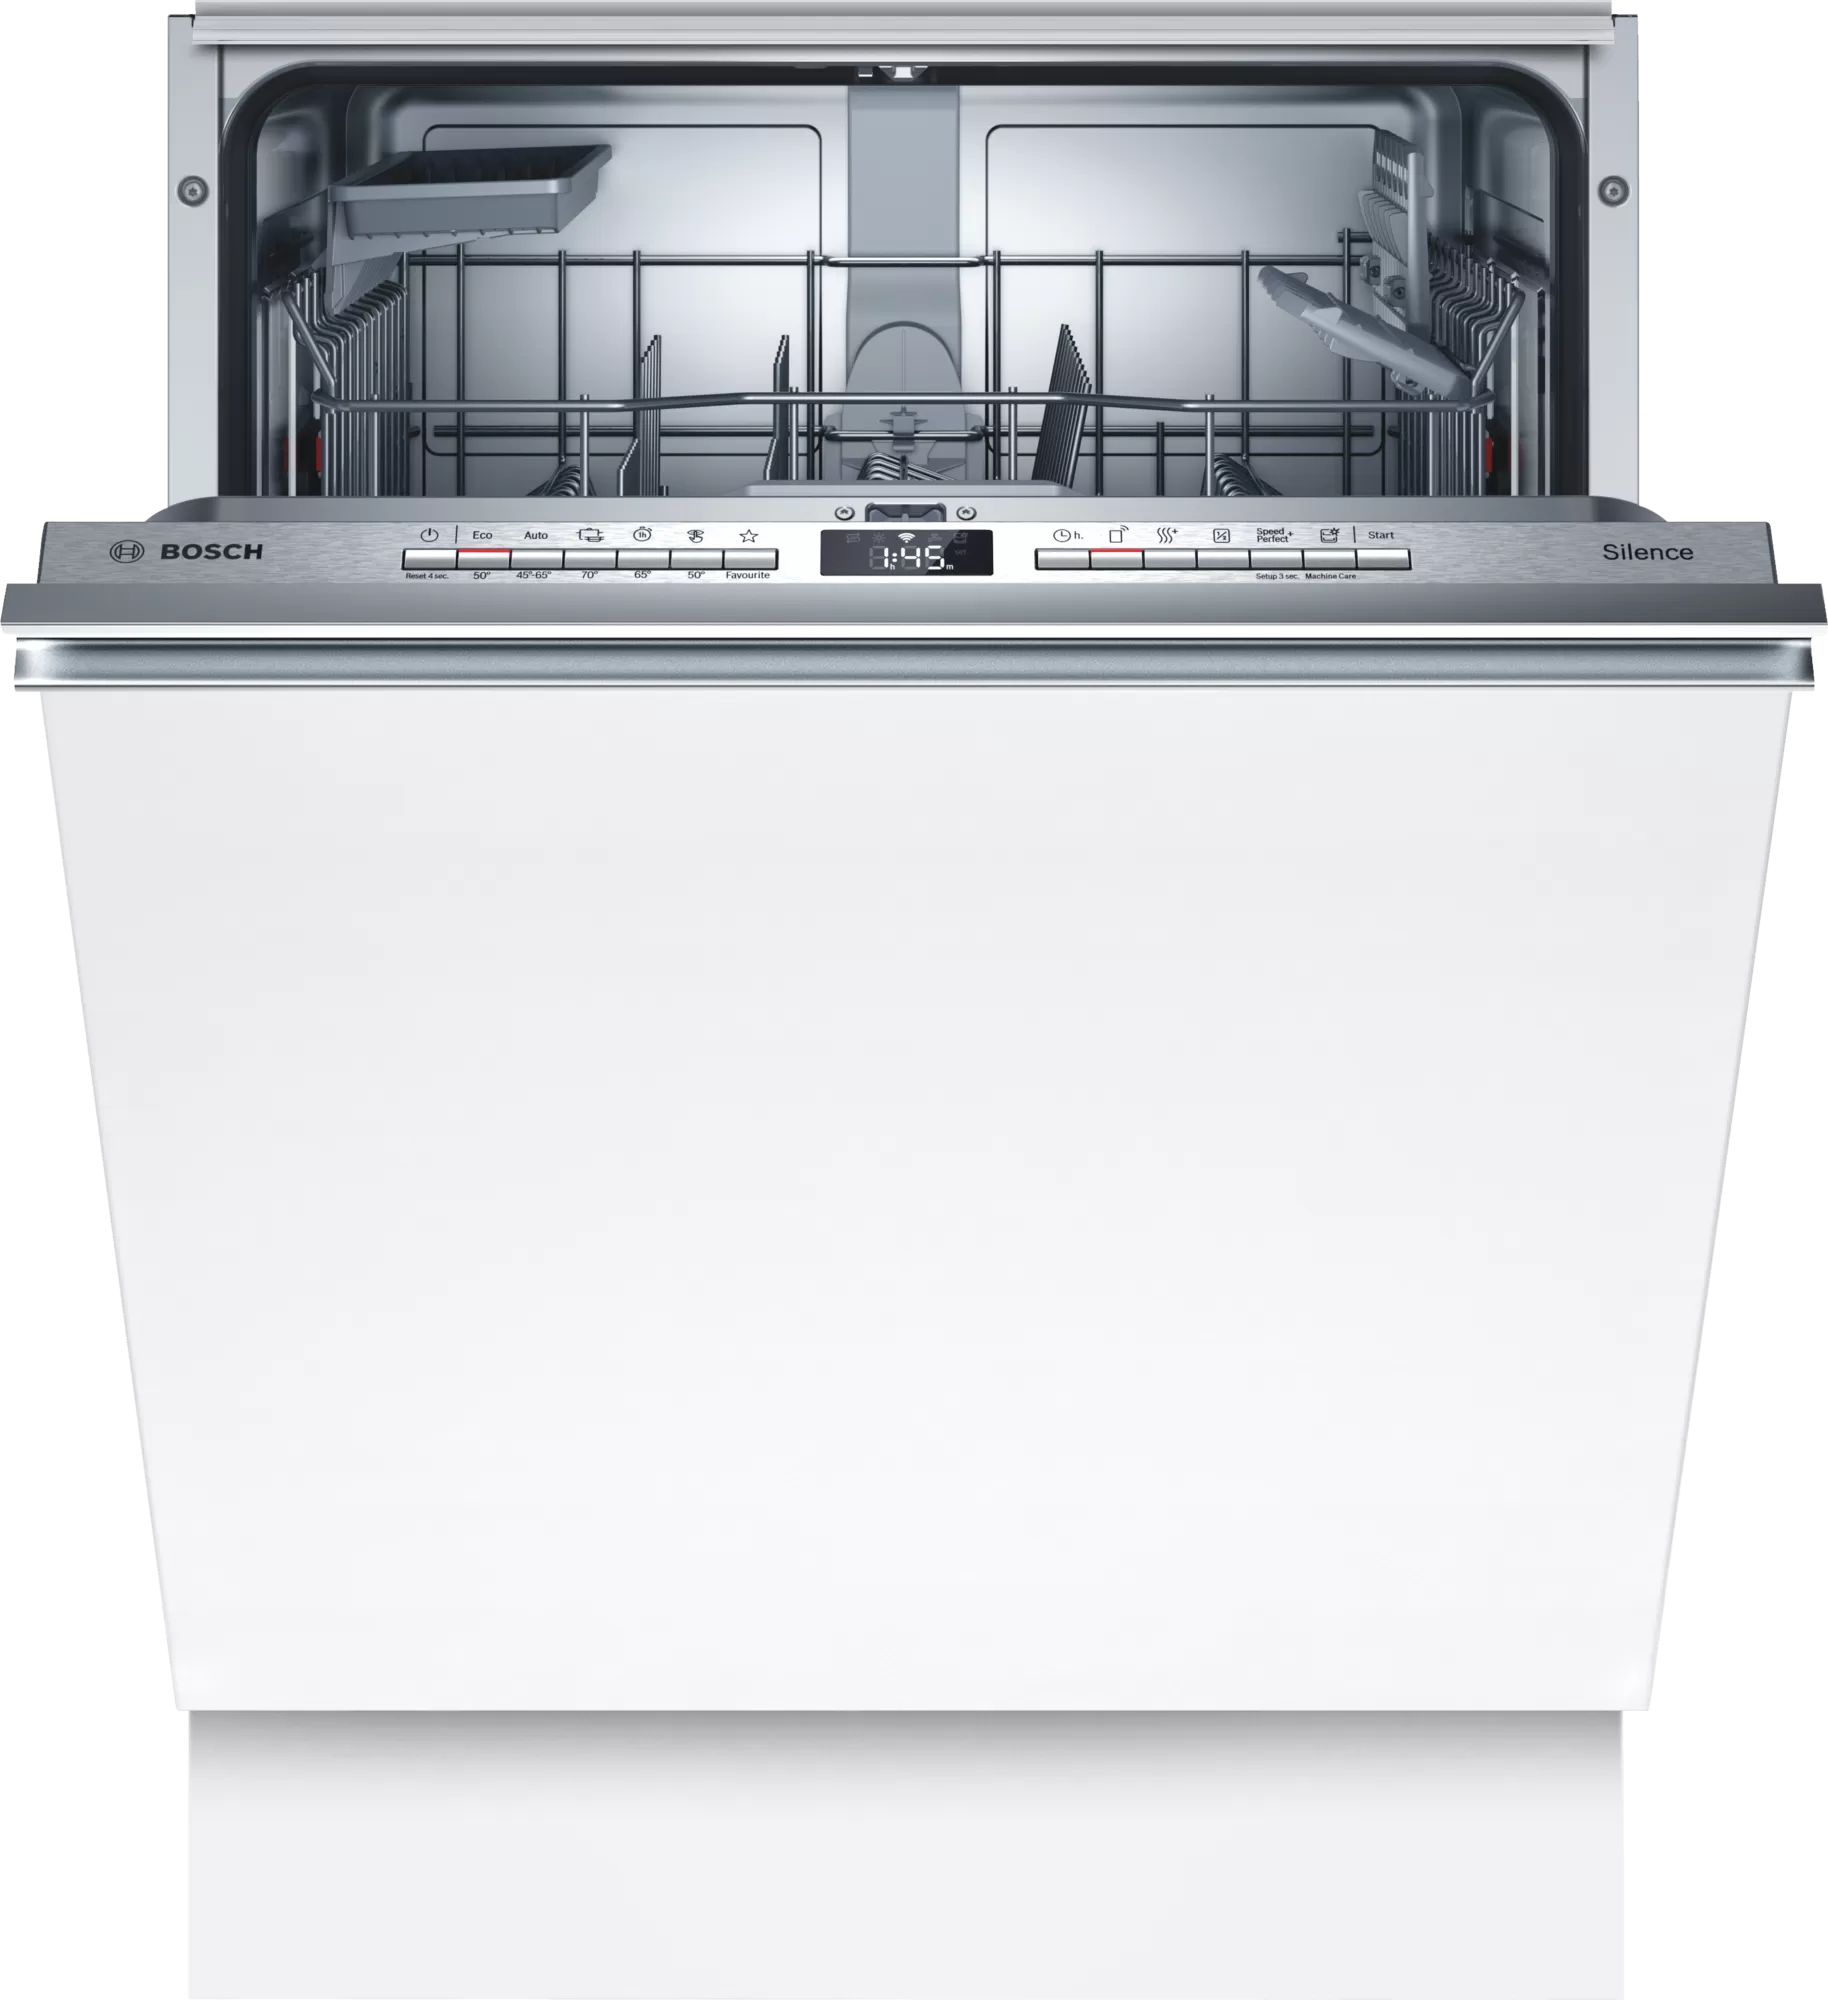 Встраиваемая посудомоечная машина Bosch SMV4HAX40E посудомоечная машина встраив bosch smv4hvx32e полноразмерная